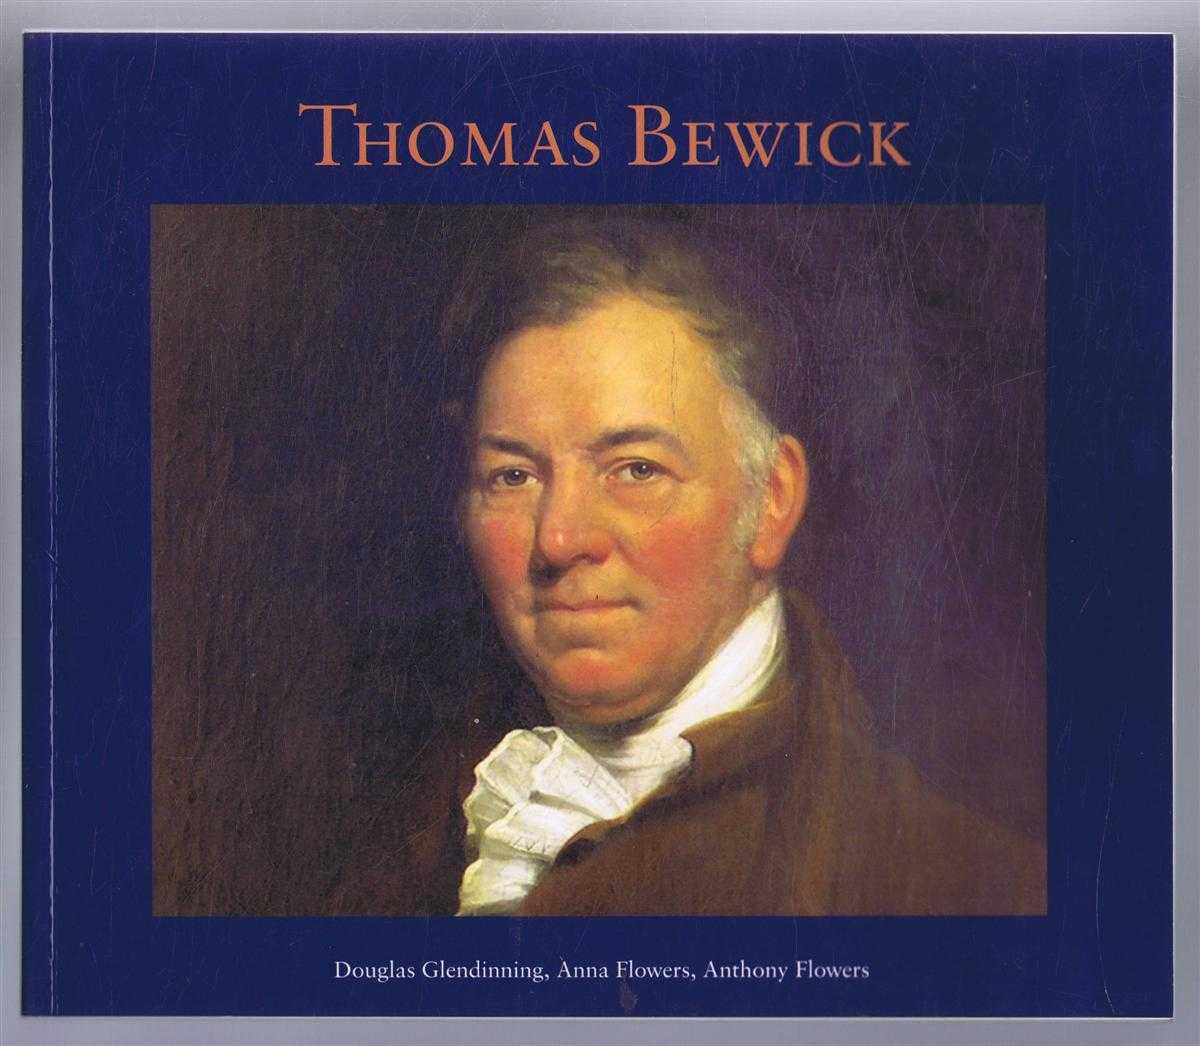 Douglas Glendinning, Anna Flowers, Anthony Flowers - Thomas Bewick 1753-1828